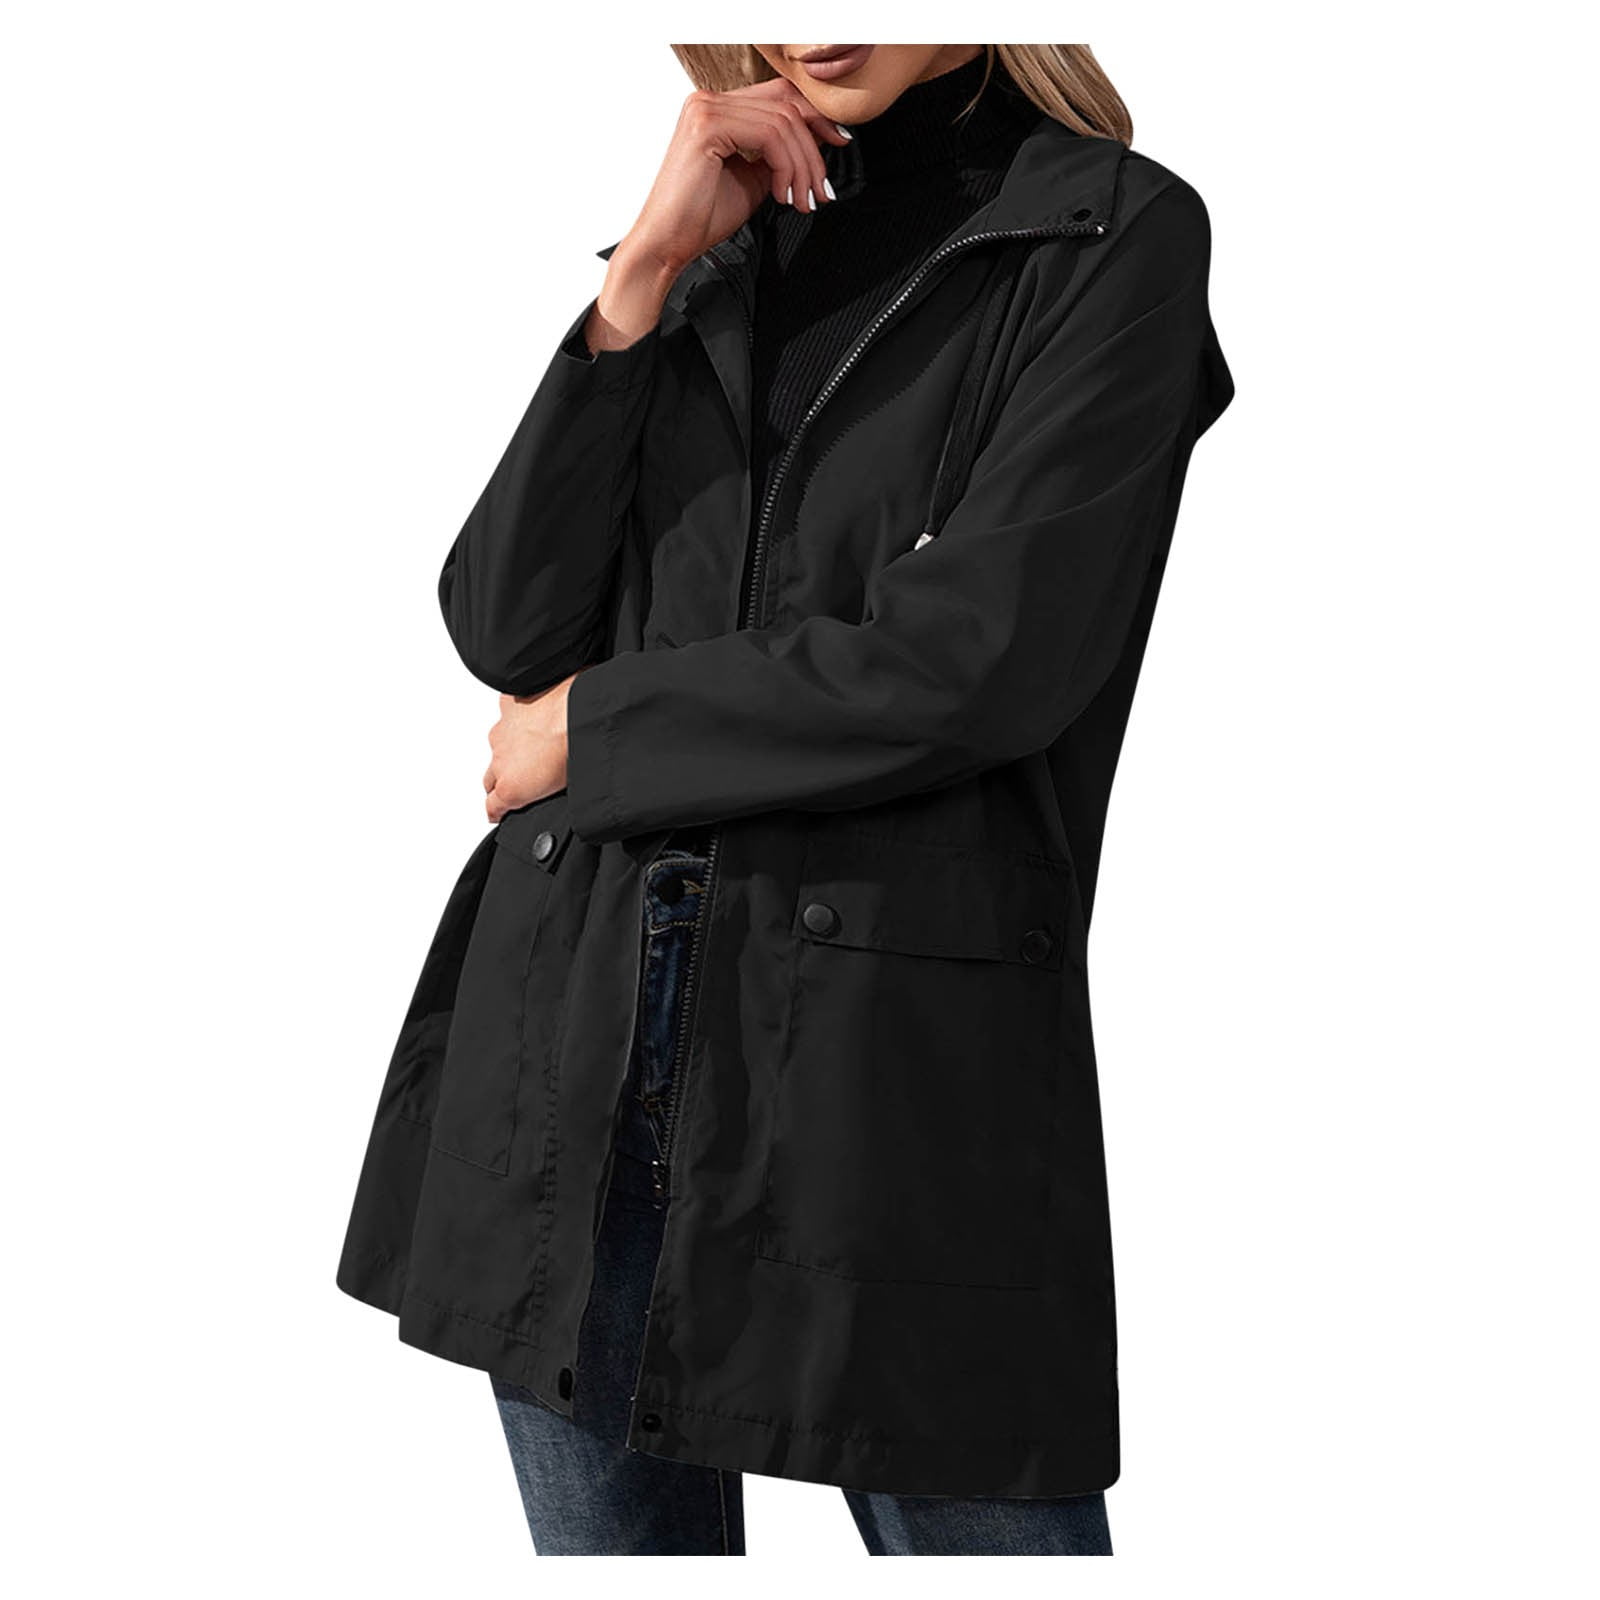 ASEIDFNSA Jacket With Hood Petite Women Jacket Raincoat Rain ...